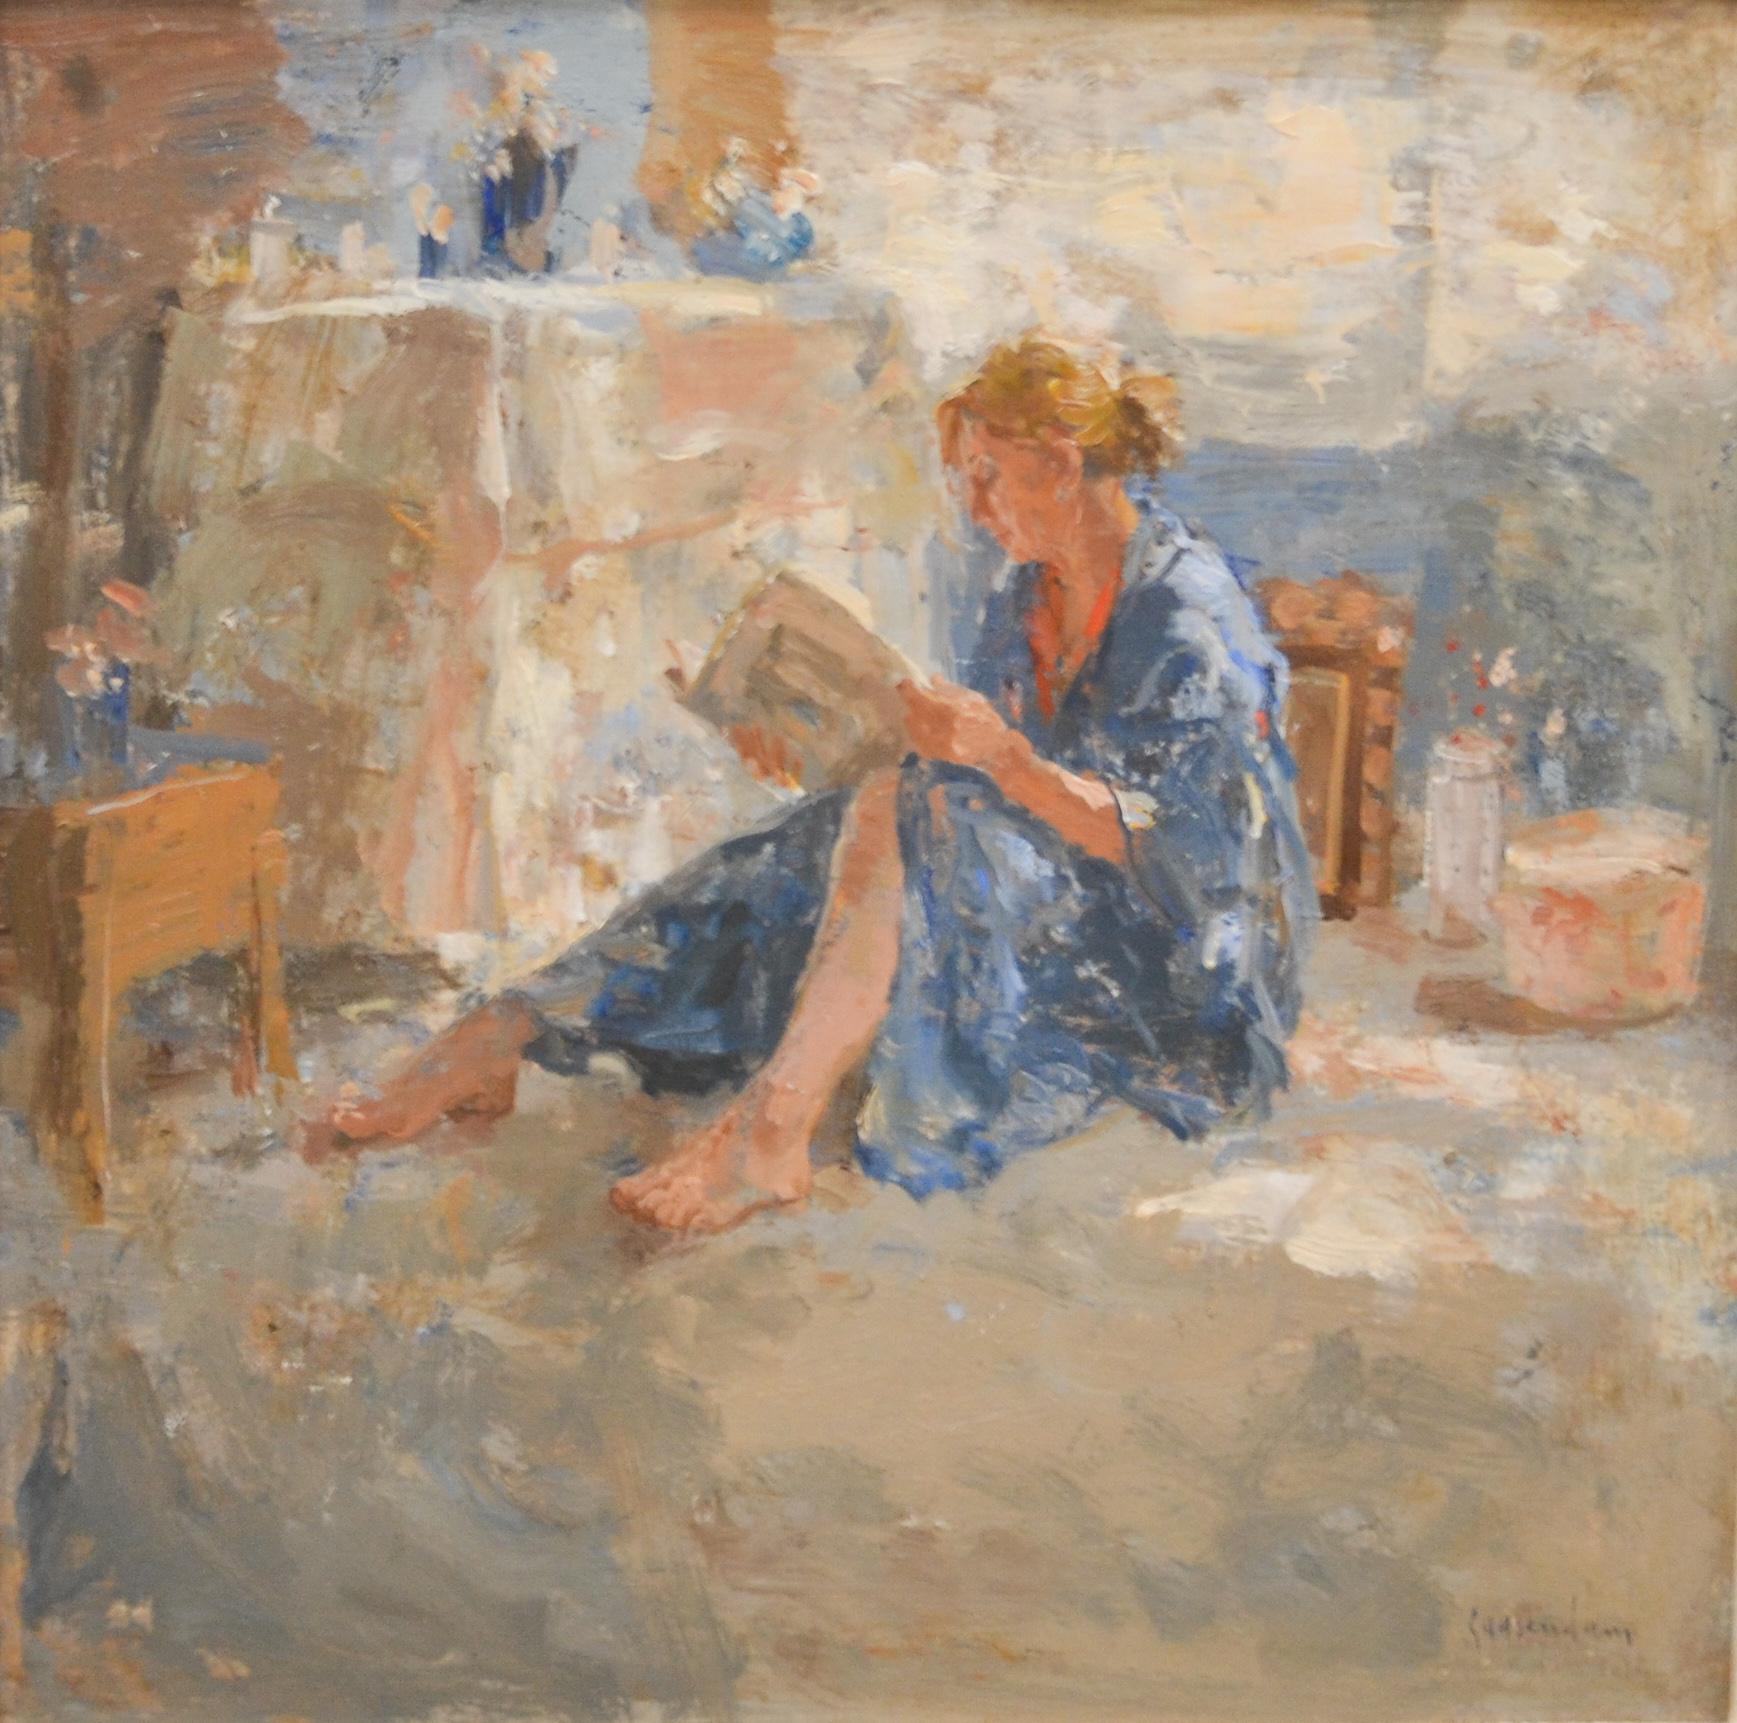 Maja in Kimono, reading- 21st Century Contemporary Figure Painting of a Woman